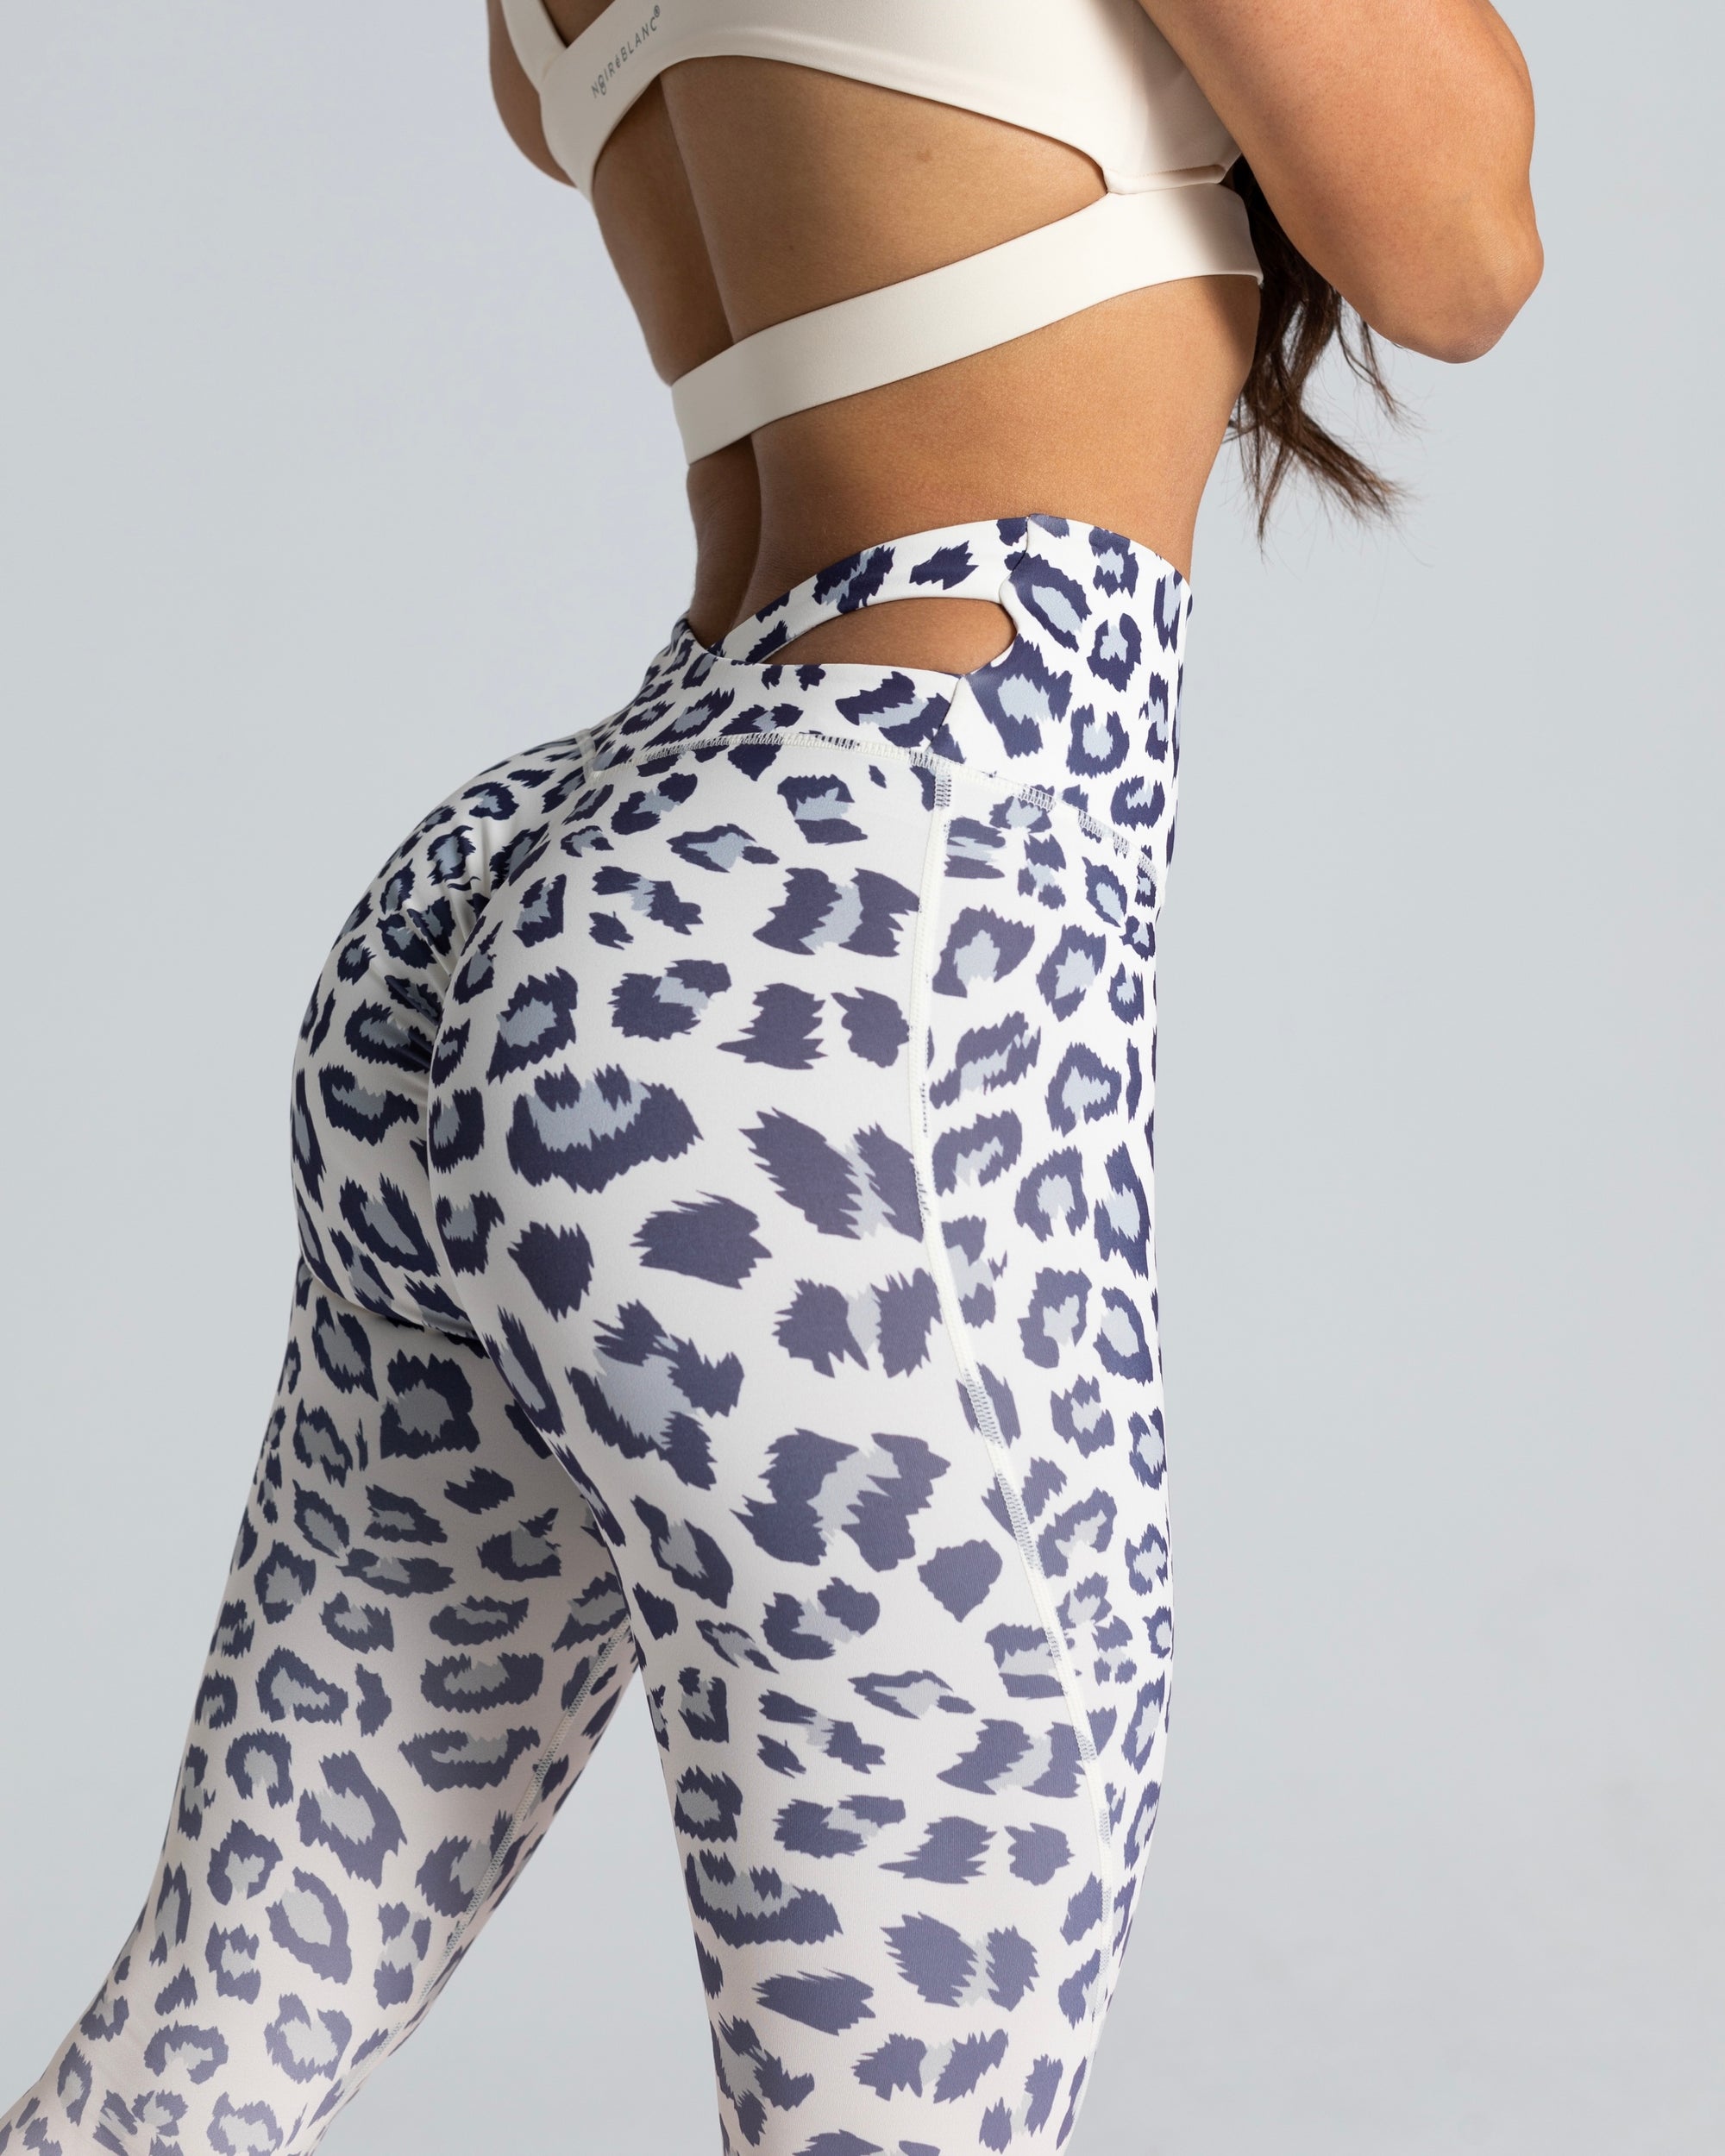 Women Tiger Face Printed Leopard Zip Detail 3D Skinny Leggings